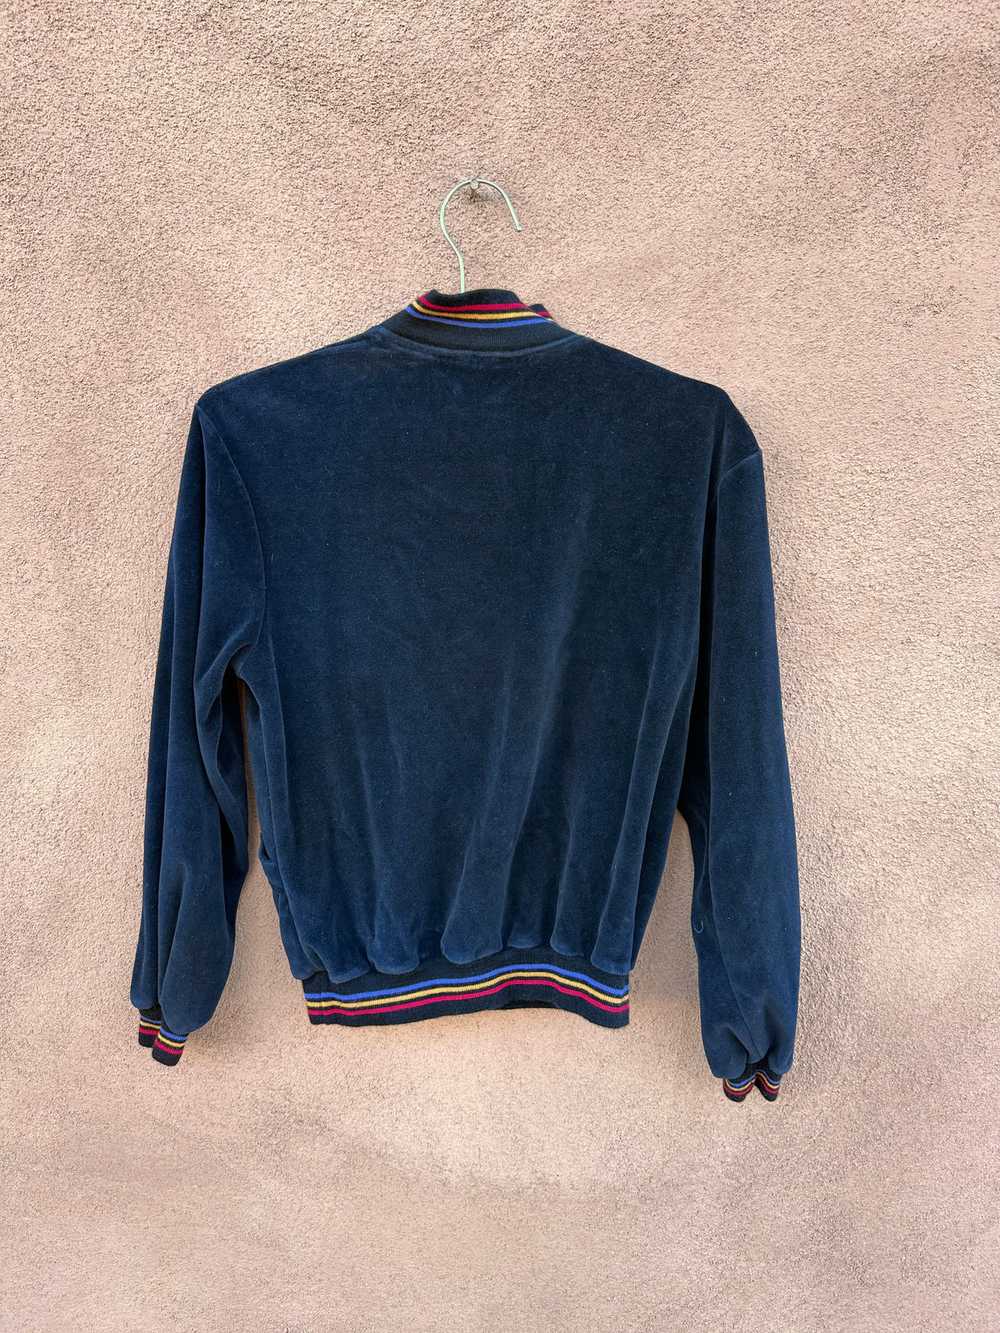 Pierre Cardin Velveteen Sweatshirt with Pockets - image 3